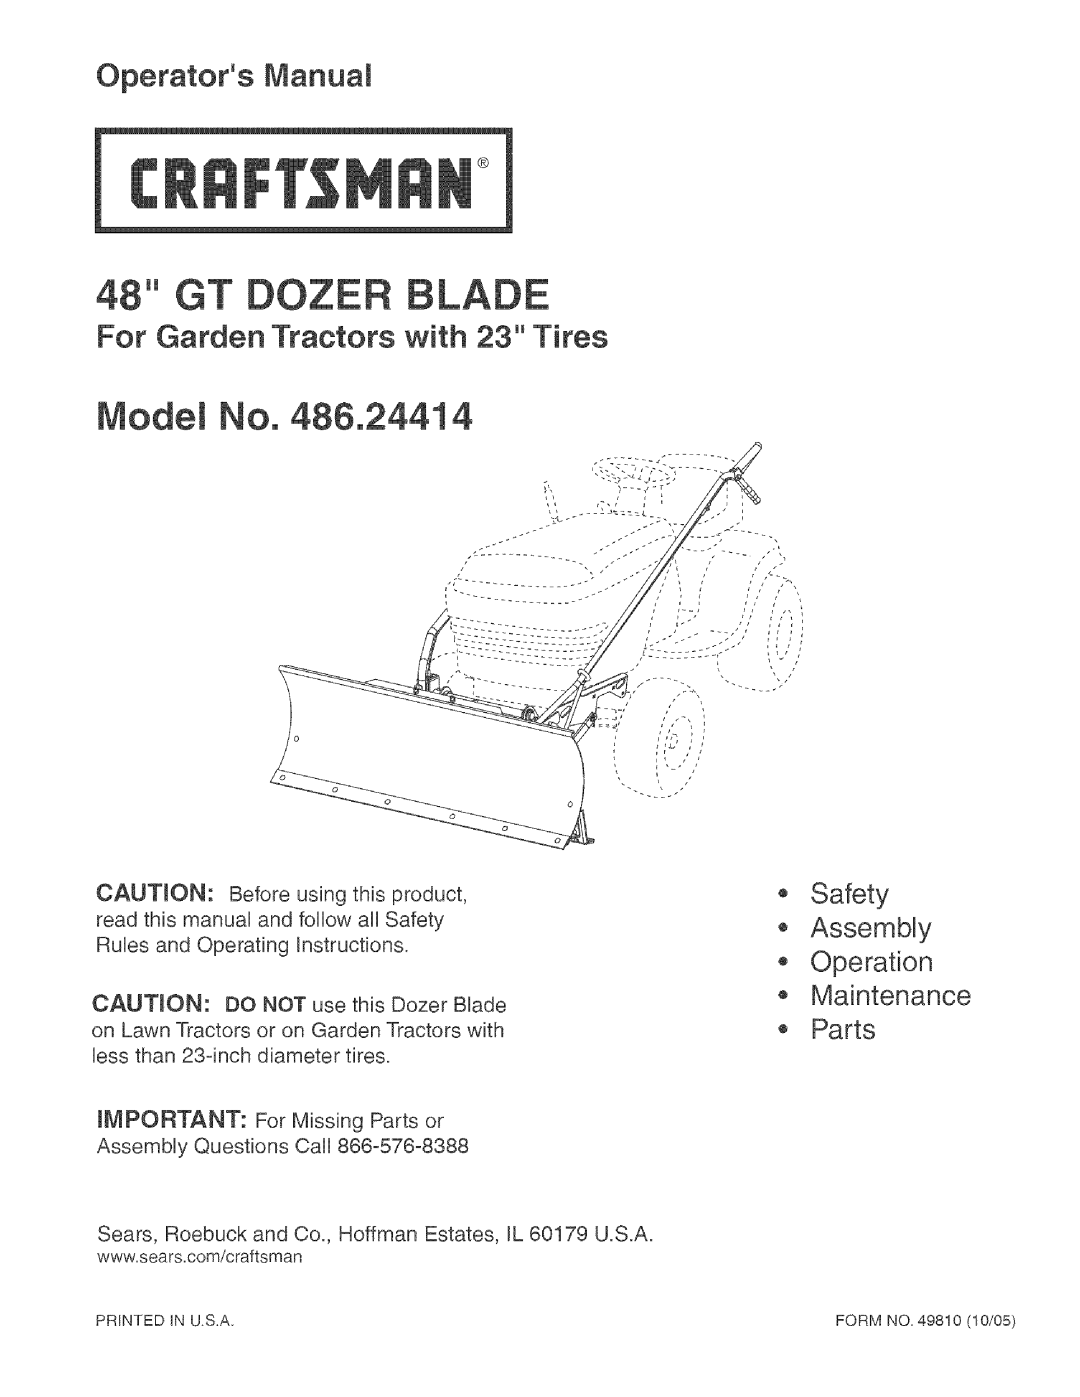 Craftsman 486.24414 manual Operators Manual, For Garden Tractors with 23 Tires, Model No 